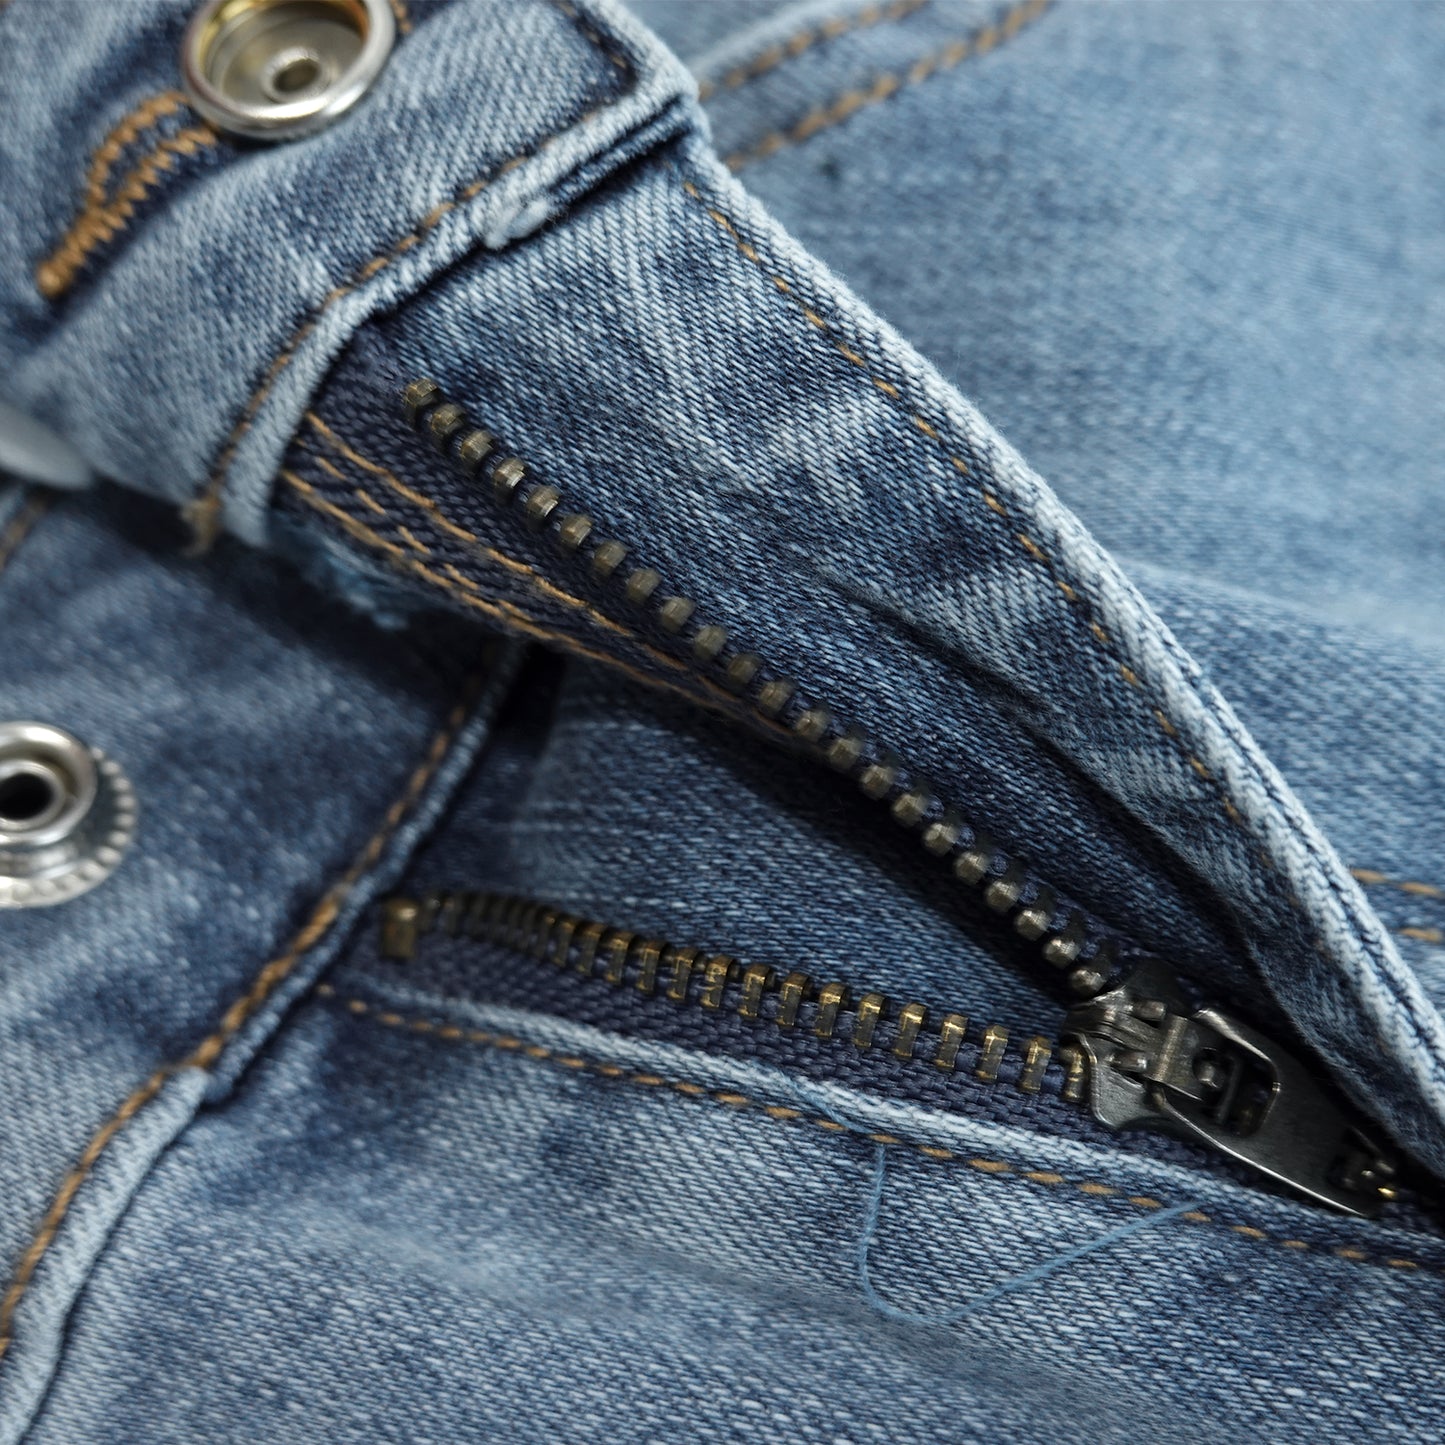 Girls Jeans, Split Hem with Dual Edges High Stretch Denim Flared Pants